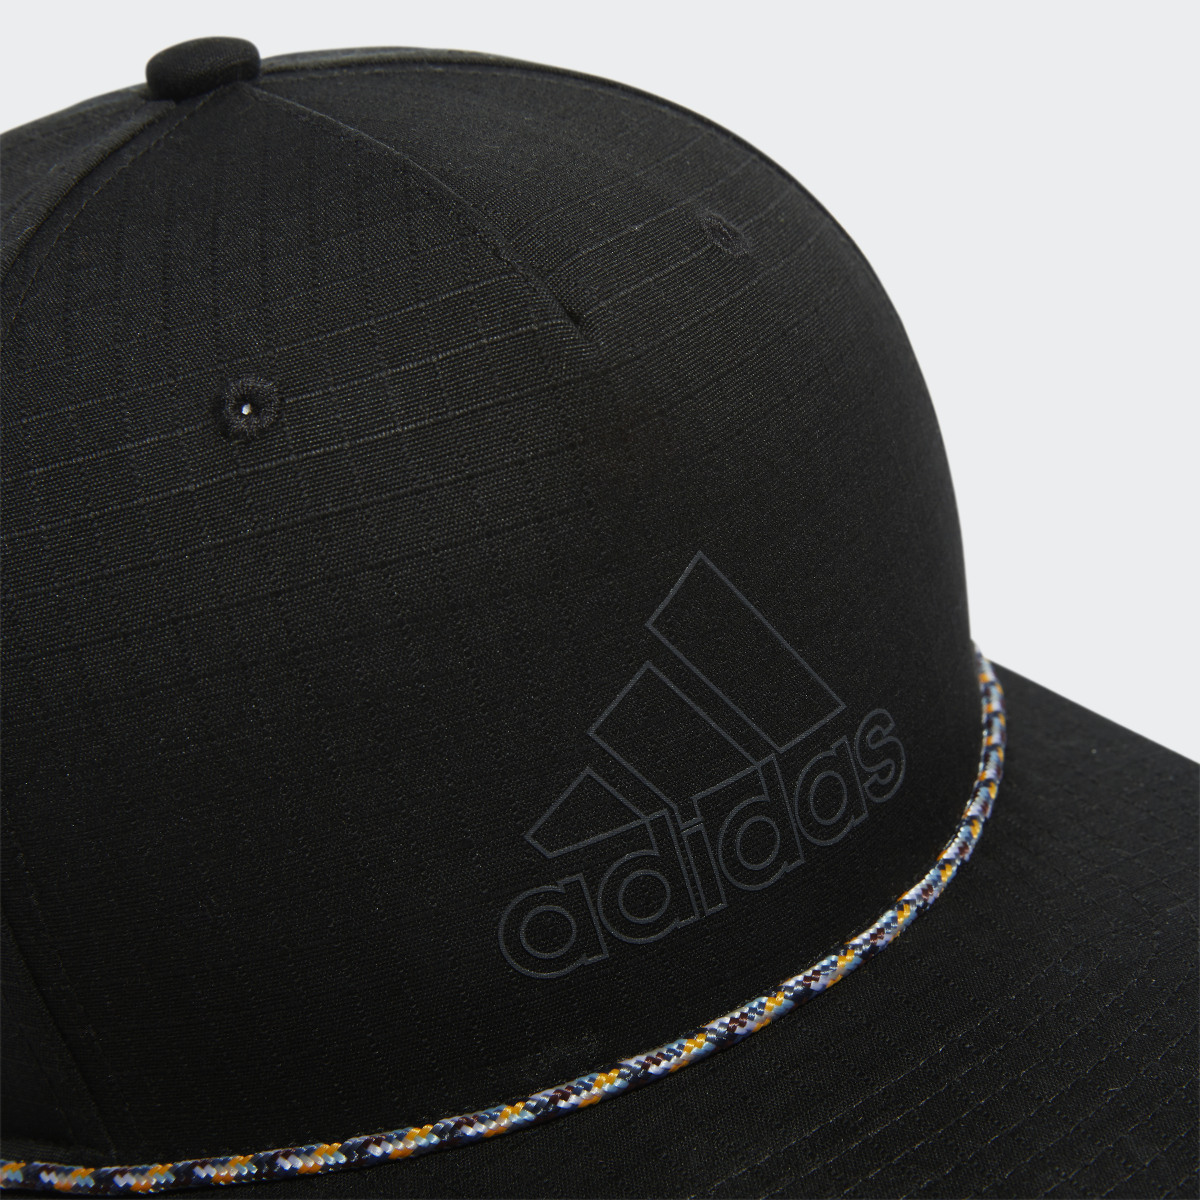 Adidas Affiliate Snapback Hat. 5